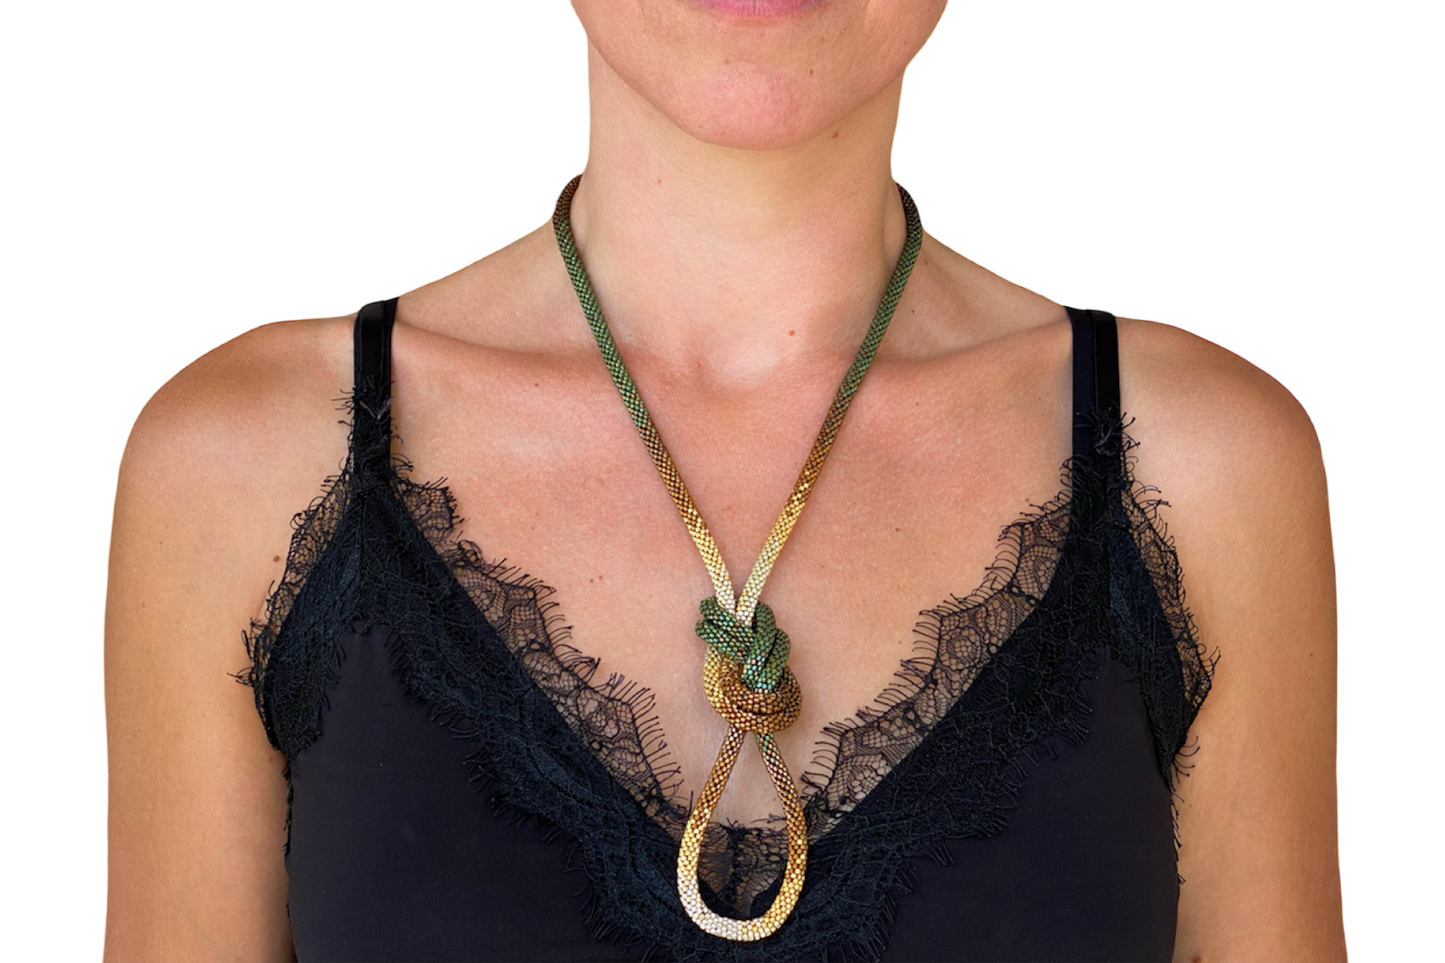 Ava sea green necklace